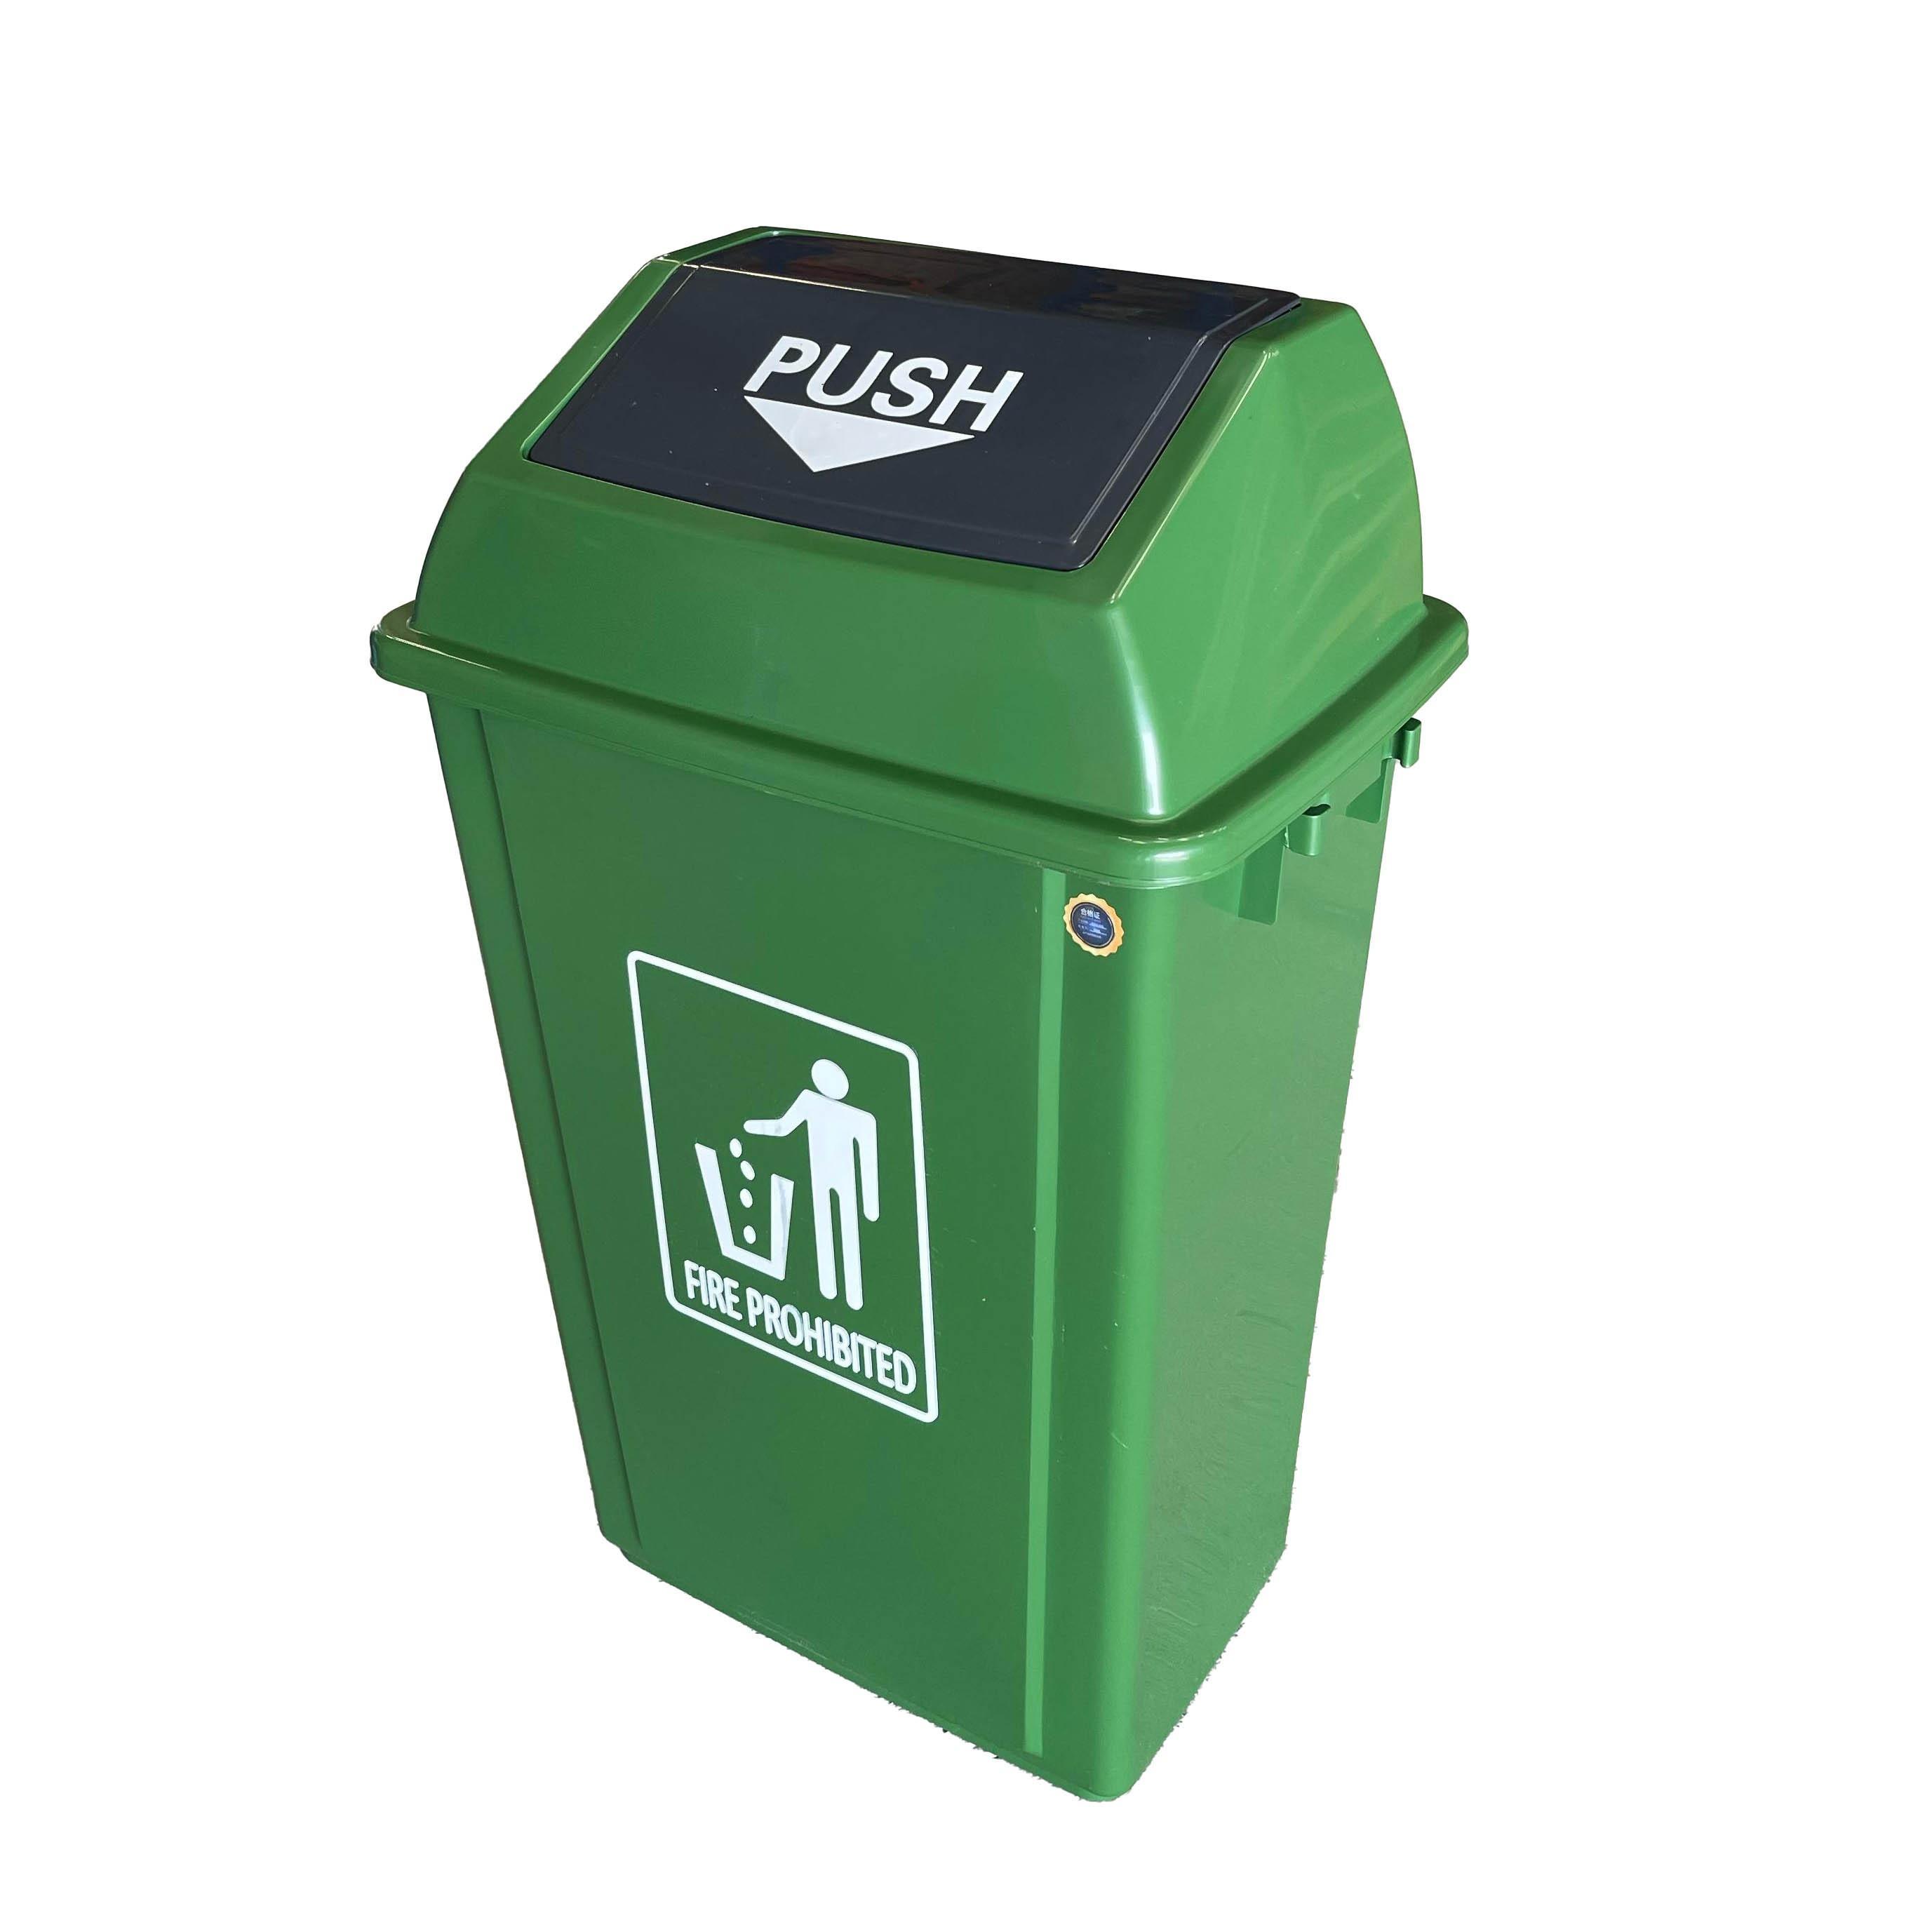 EK Quadrate Garbage Bin Green -40 liter